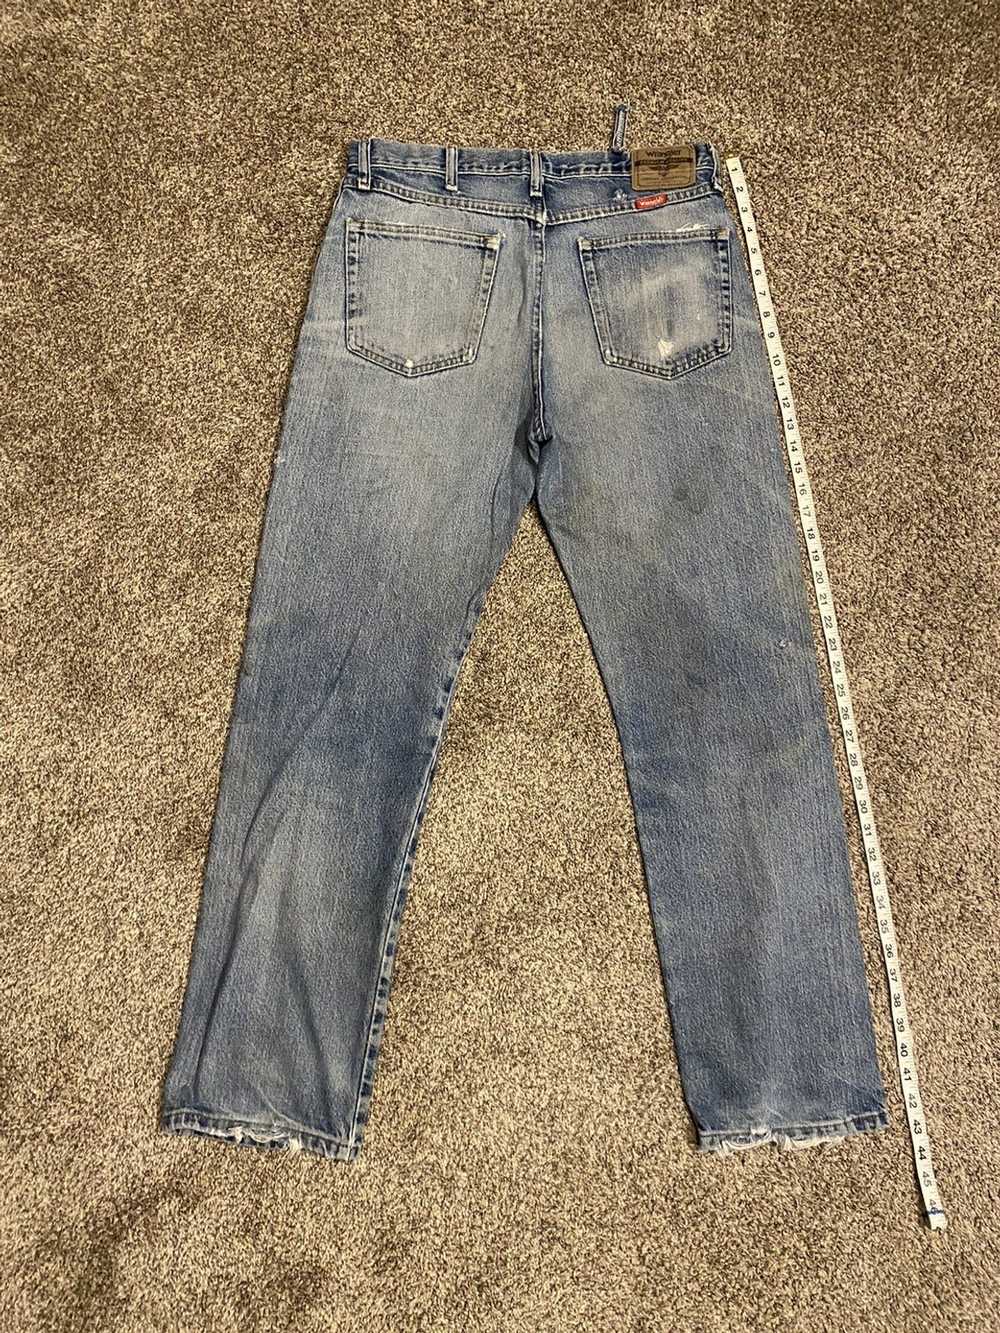 Wrangler Distressed wrangler jeans 34x32 - image 5